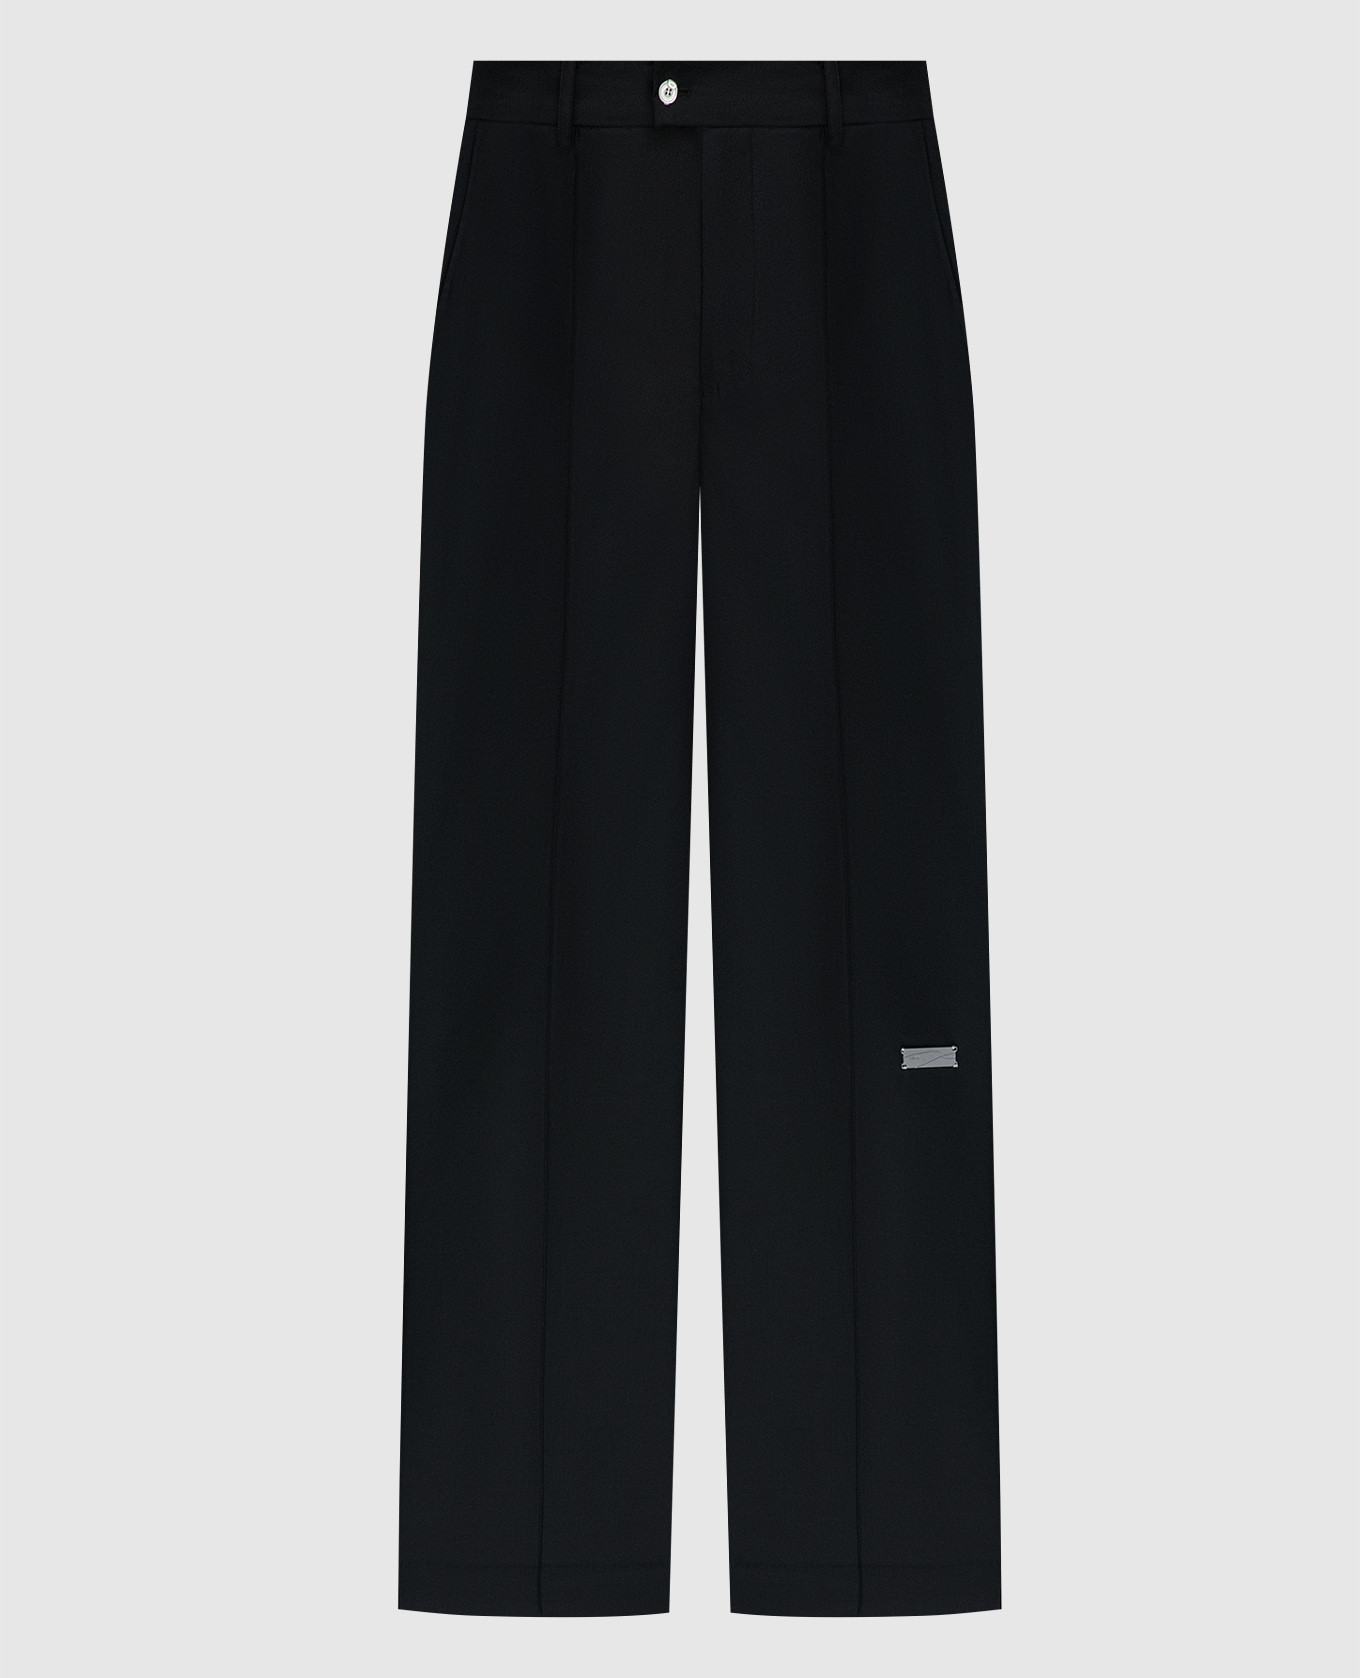 Black pants with wool